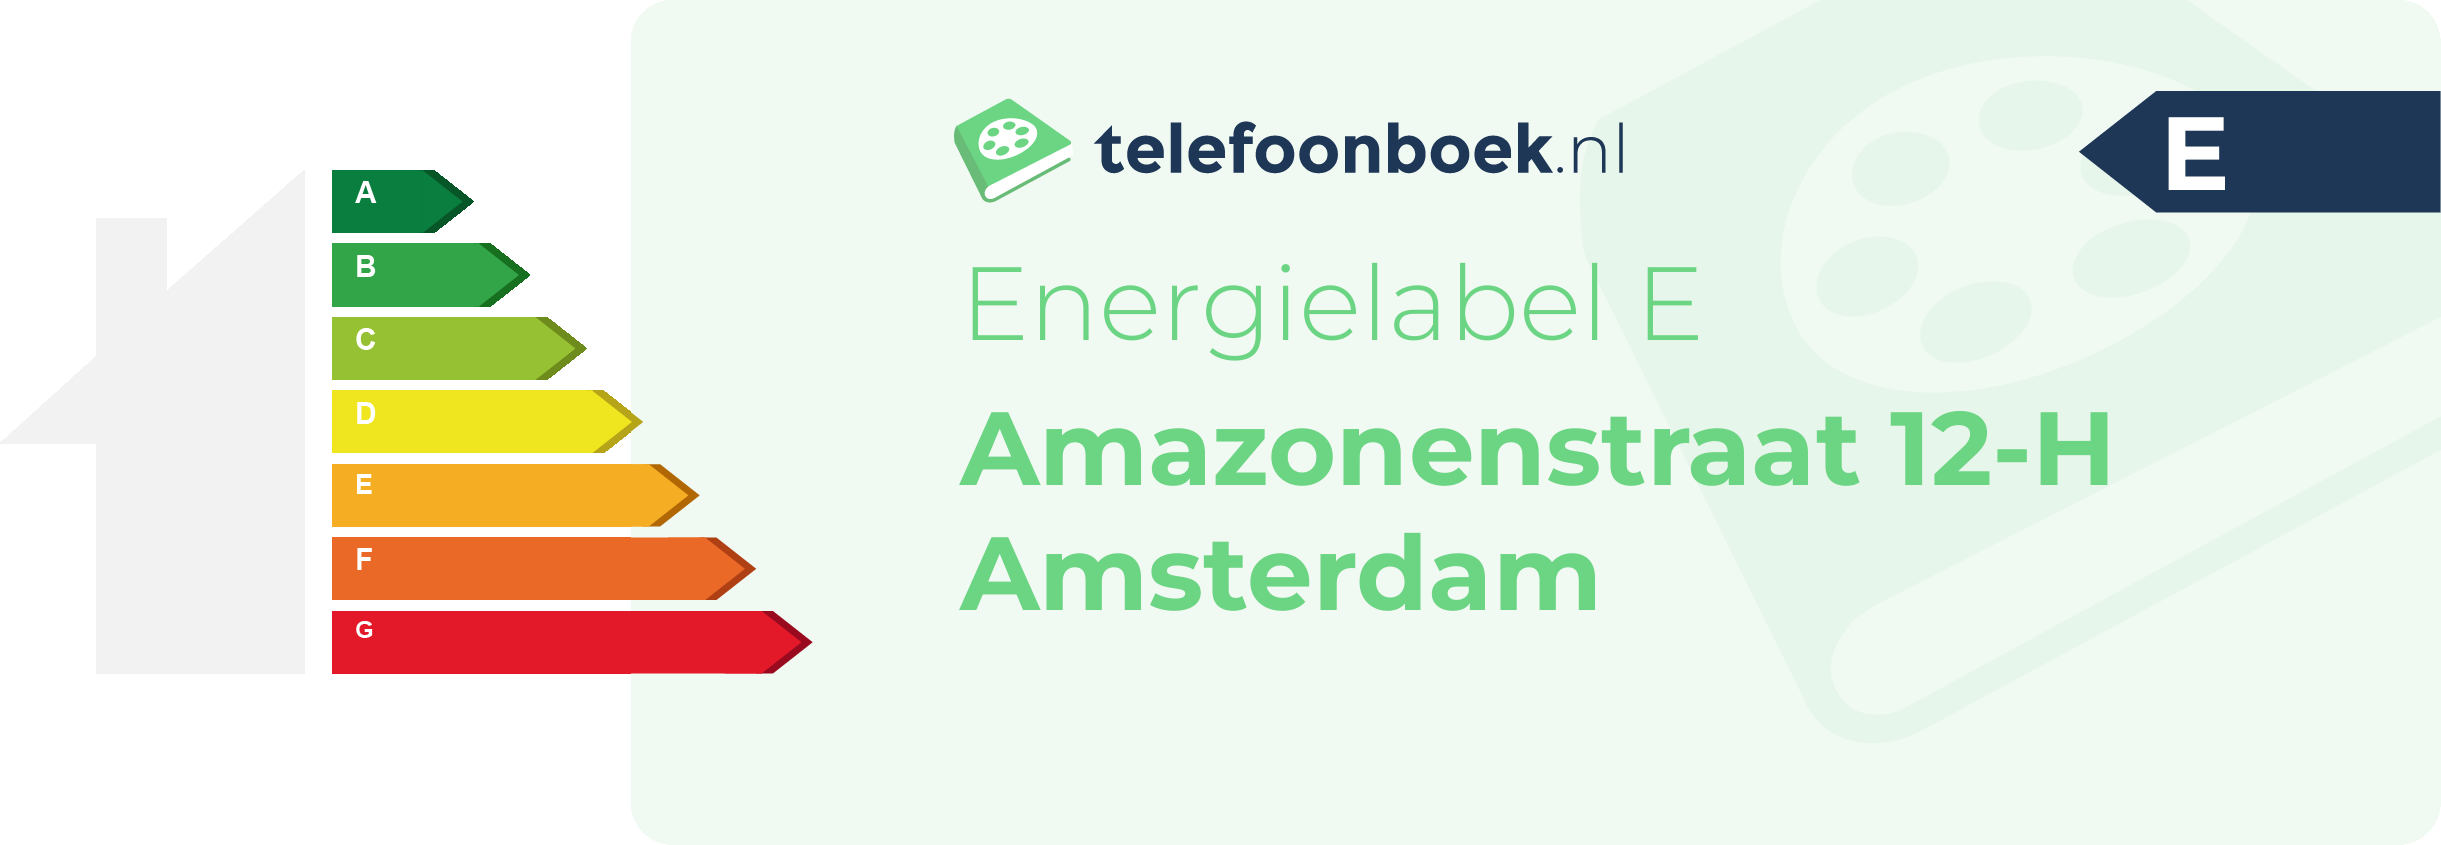 Energielabel Amazonenstraat 12-H Amsterdam